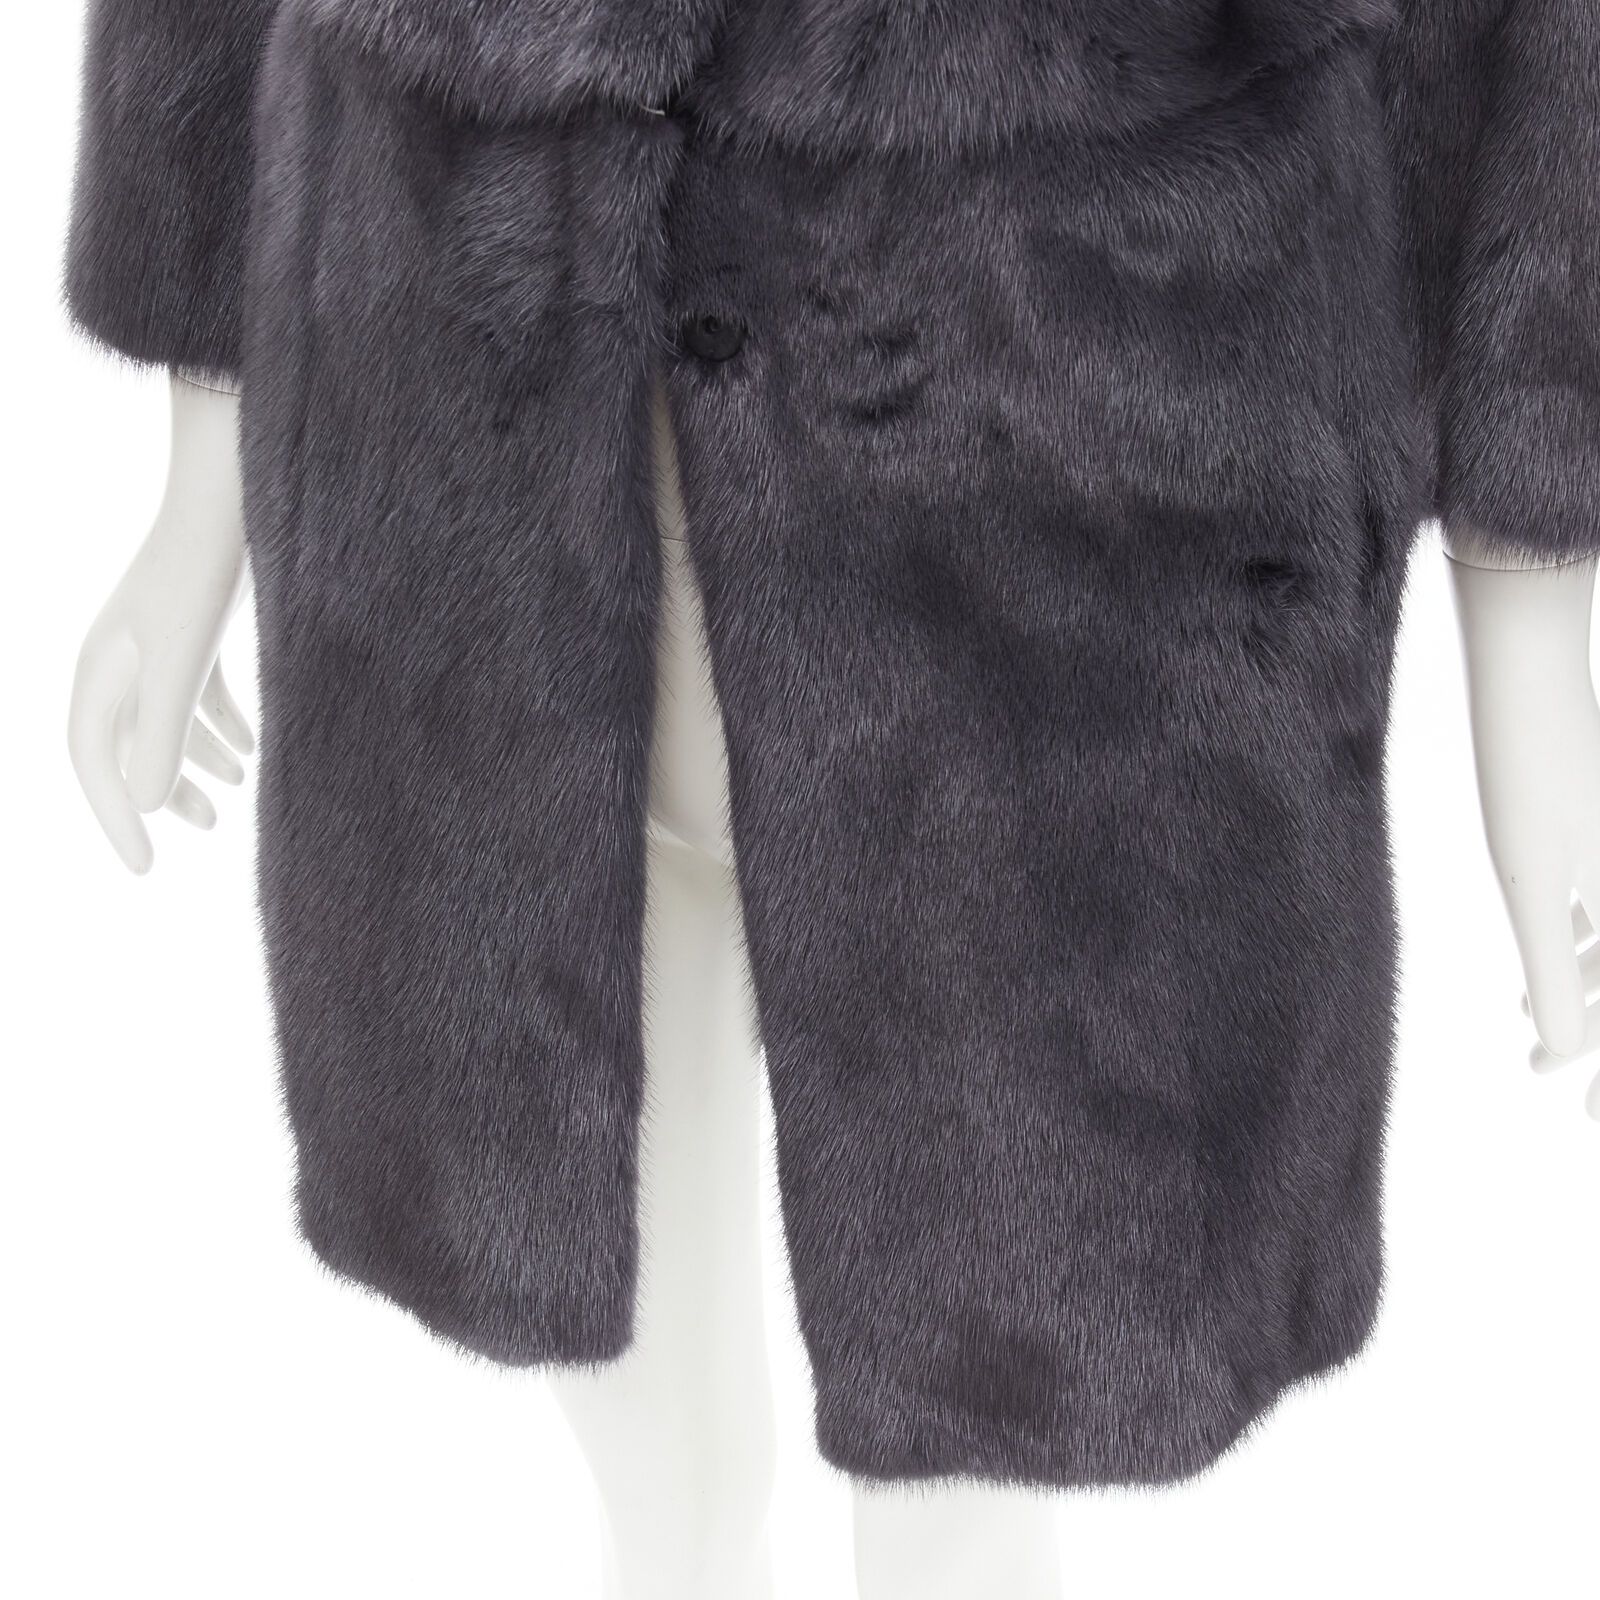 Fendi FENDI grey black fur leather 4-way reversible zip belted coat jacket IT38 Size XS / US 0-2 / IT 36-38 - 11 Thumbnail